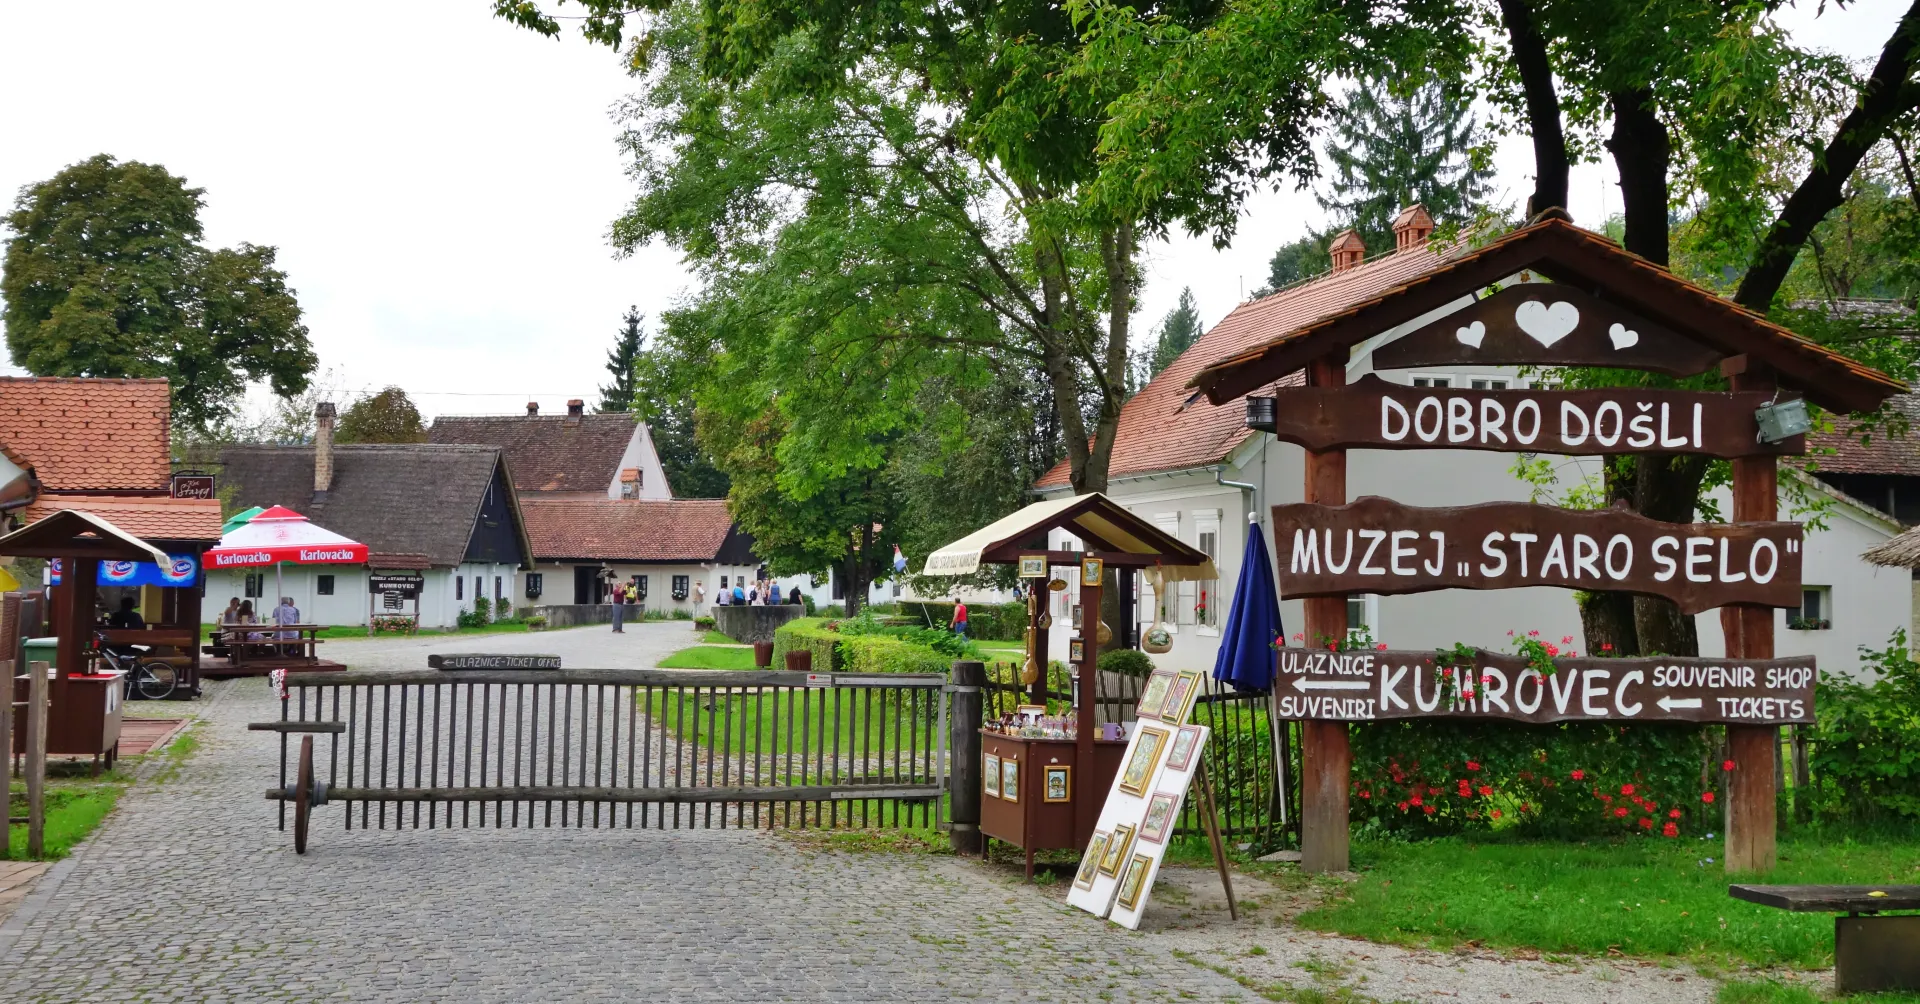 Muzej na prostem “Staro selo” Kumrovec